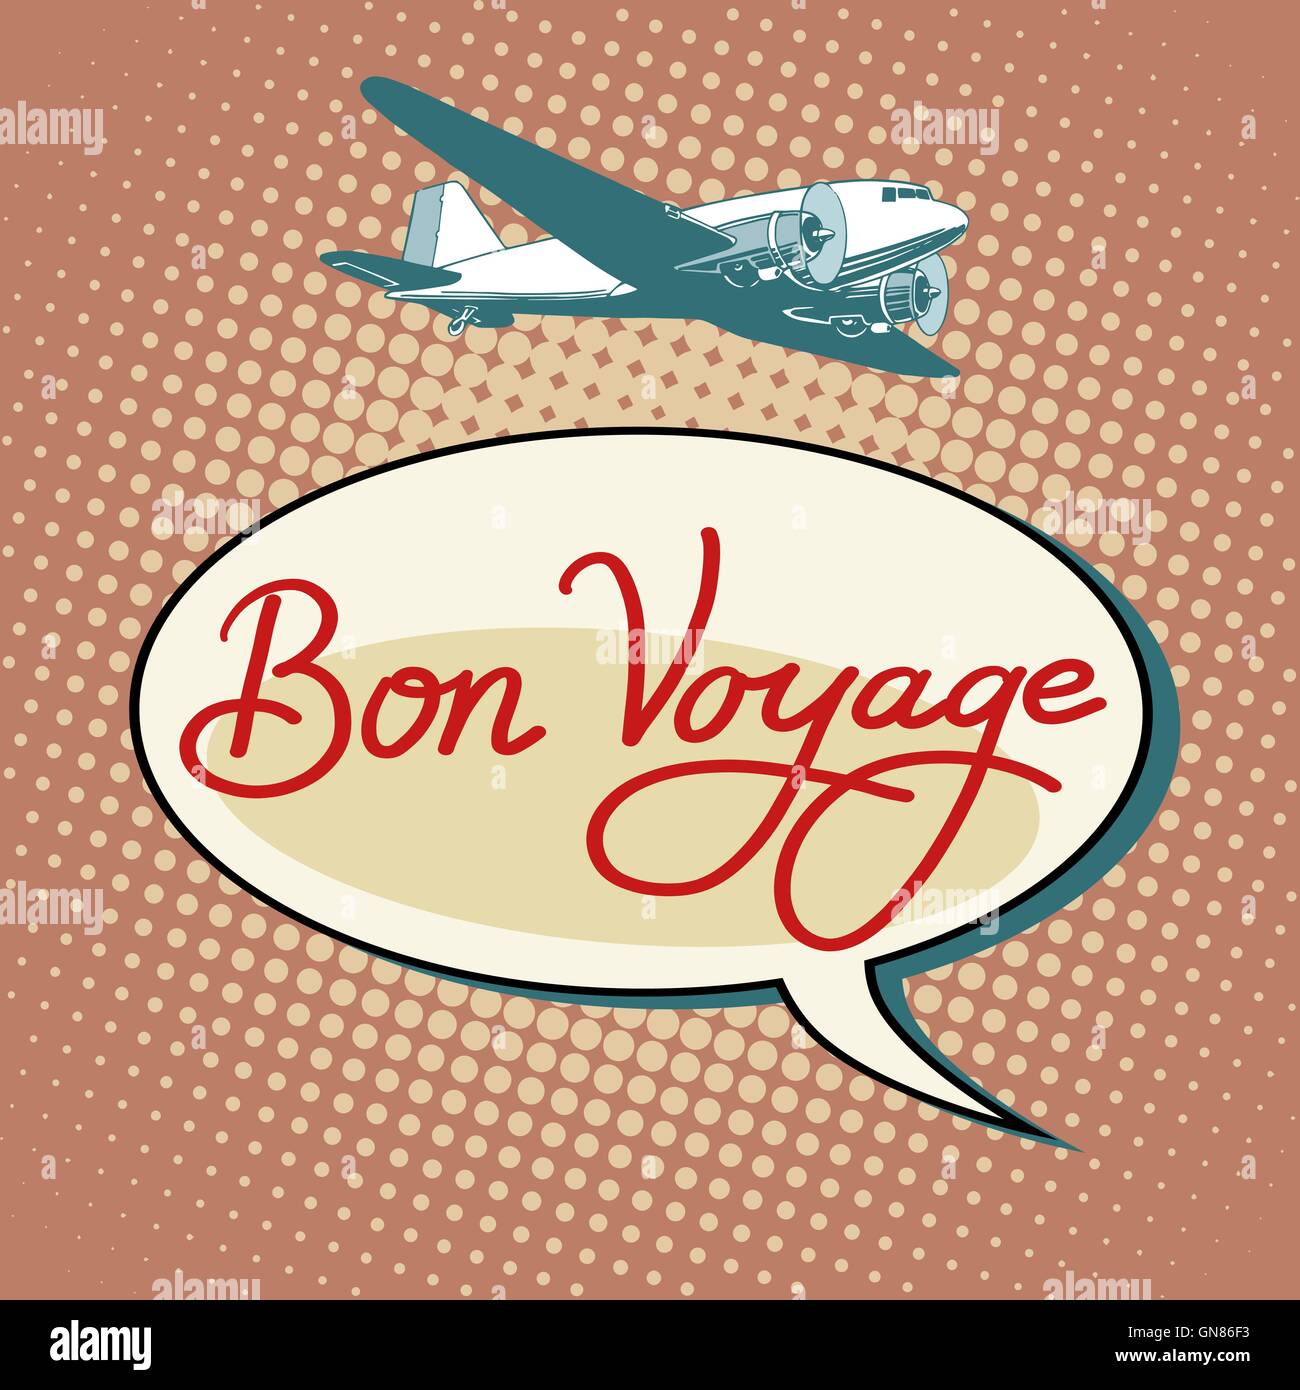 Bon voyage plane tourism flights Stock Vector